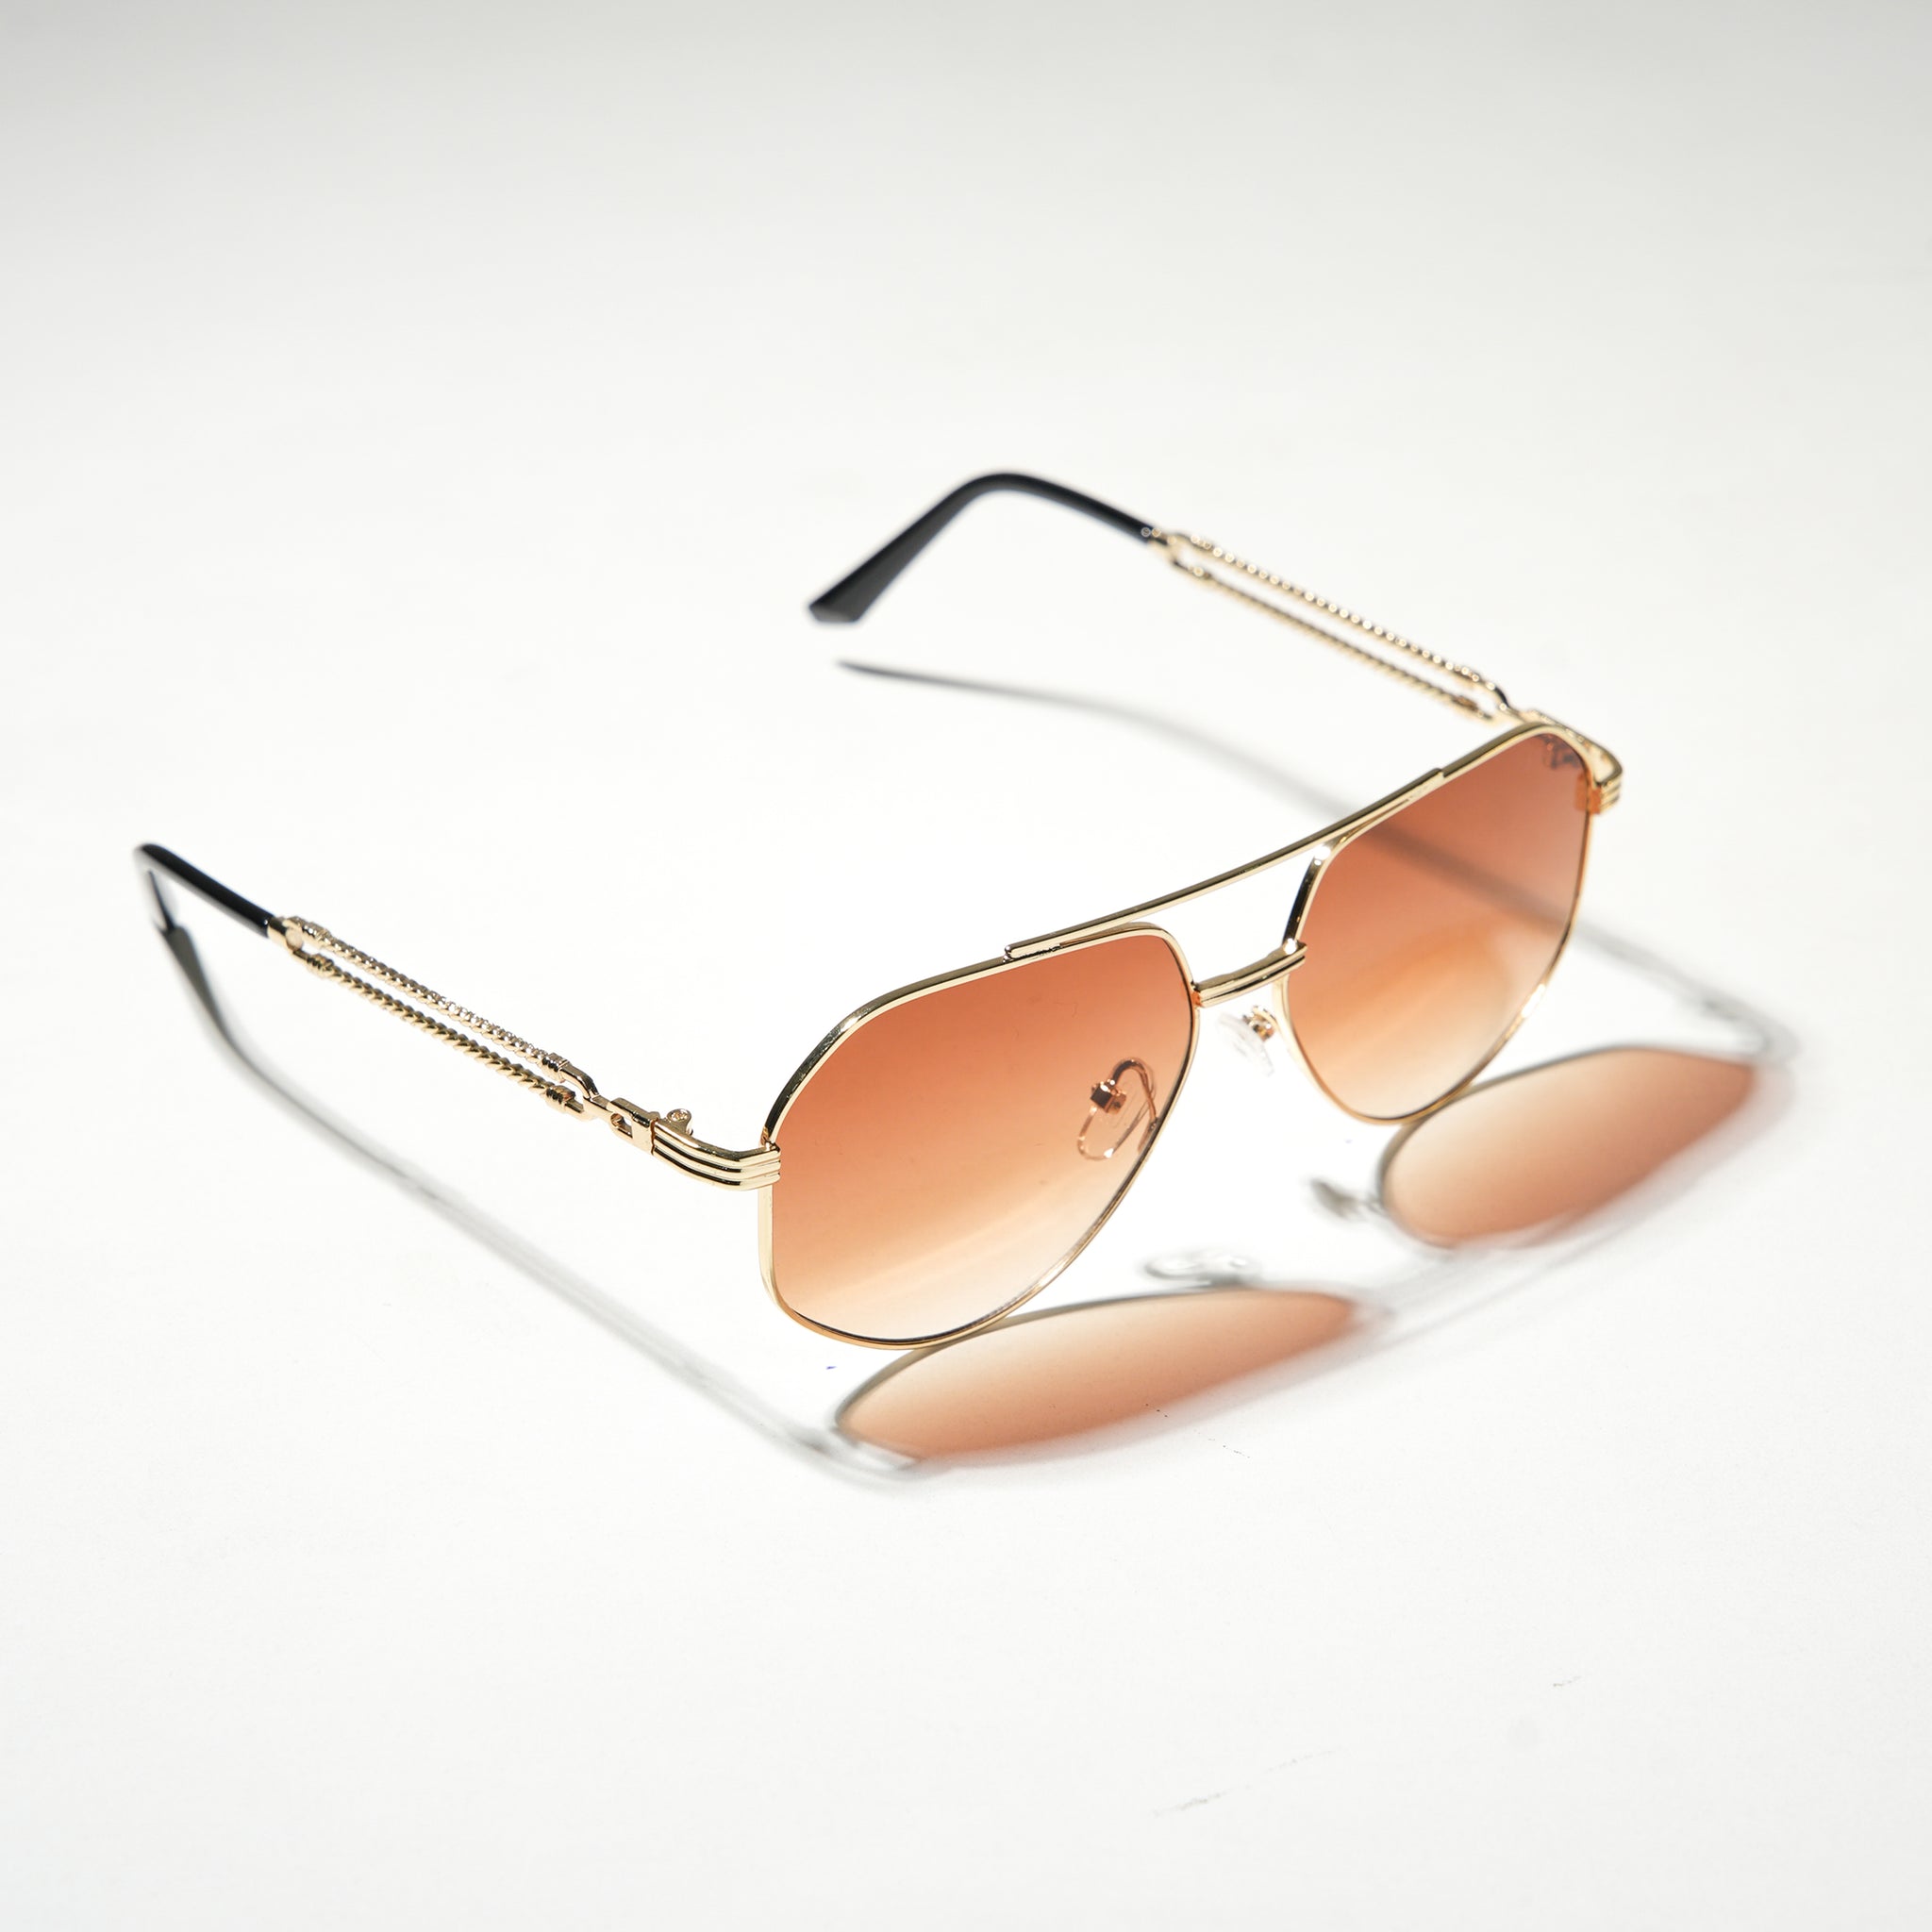 Chokore Double Bridge Aviator Sunglasses with Stylish Temple (Brown)